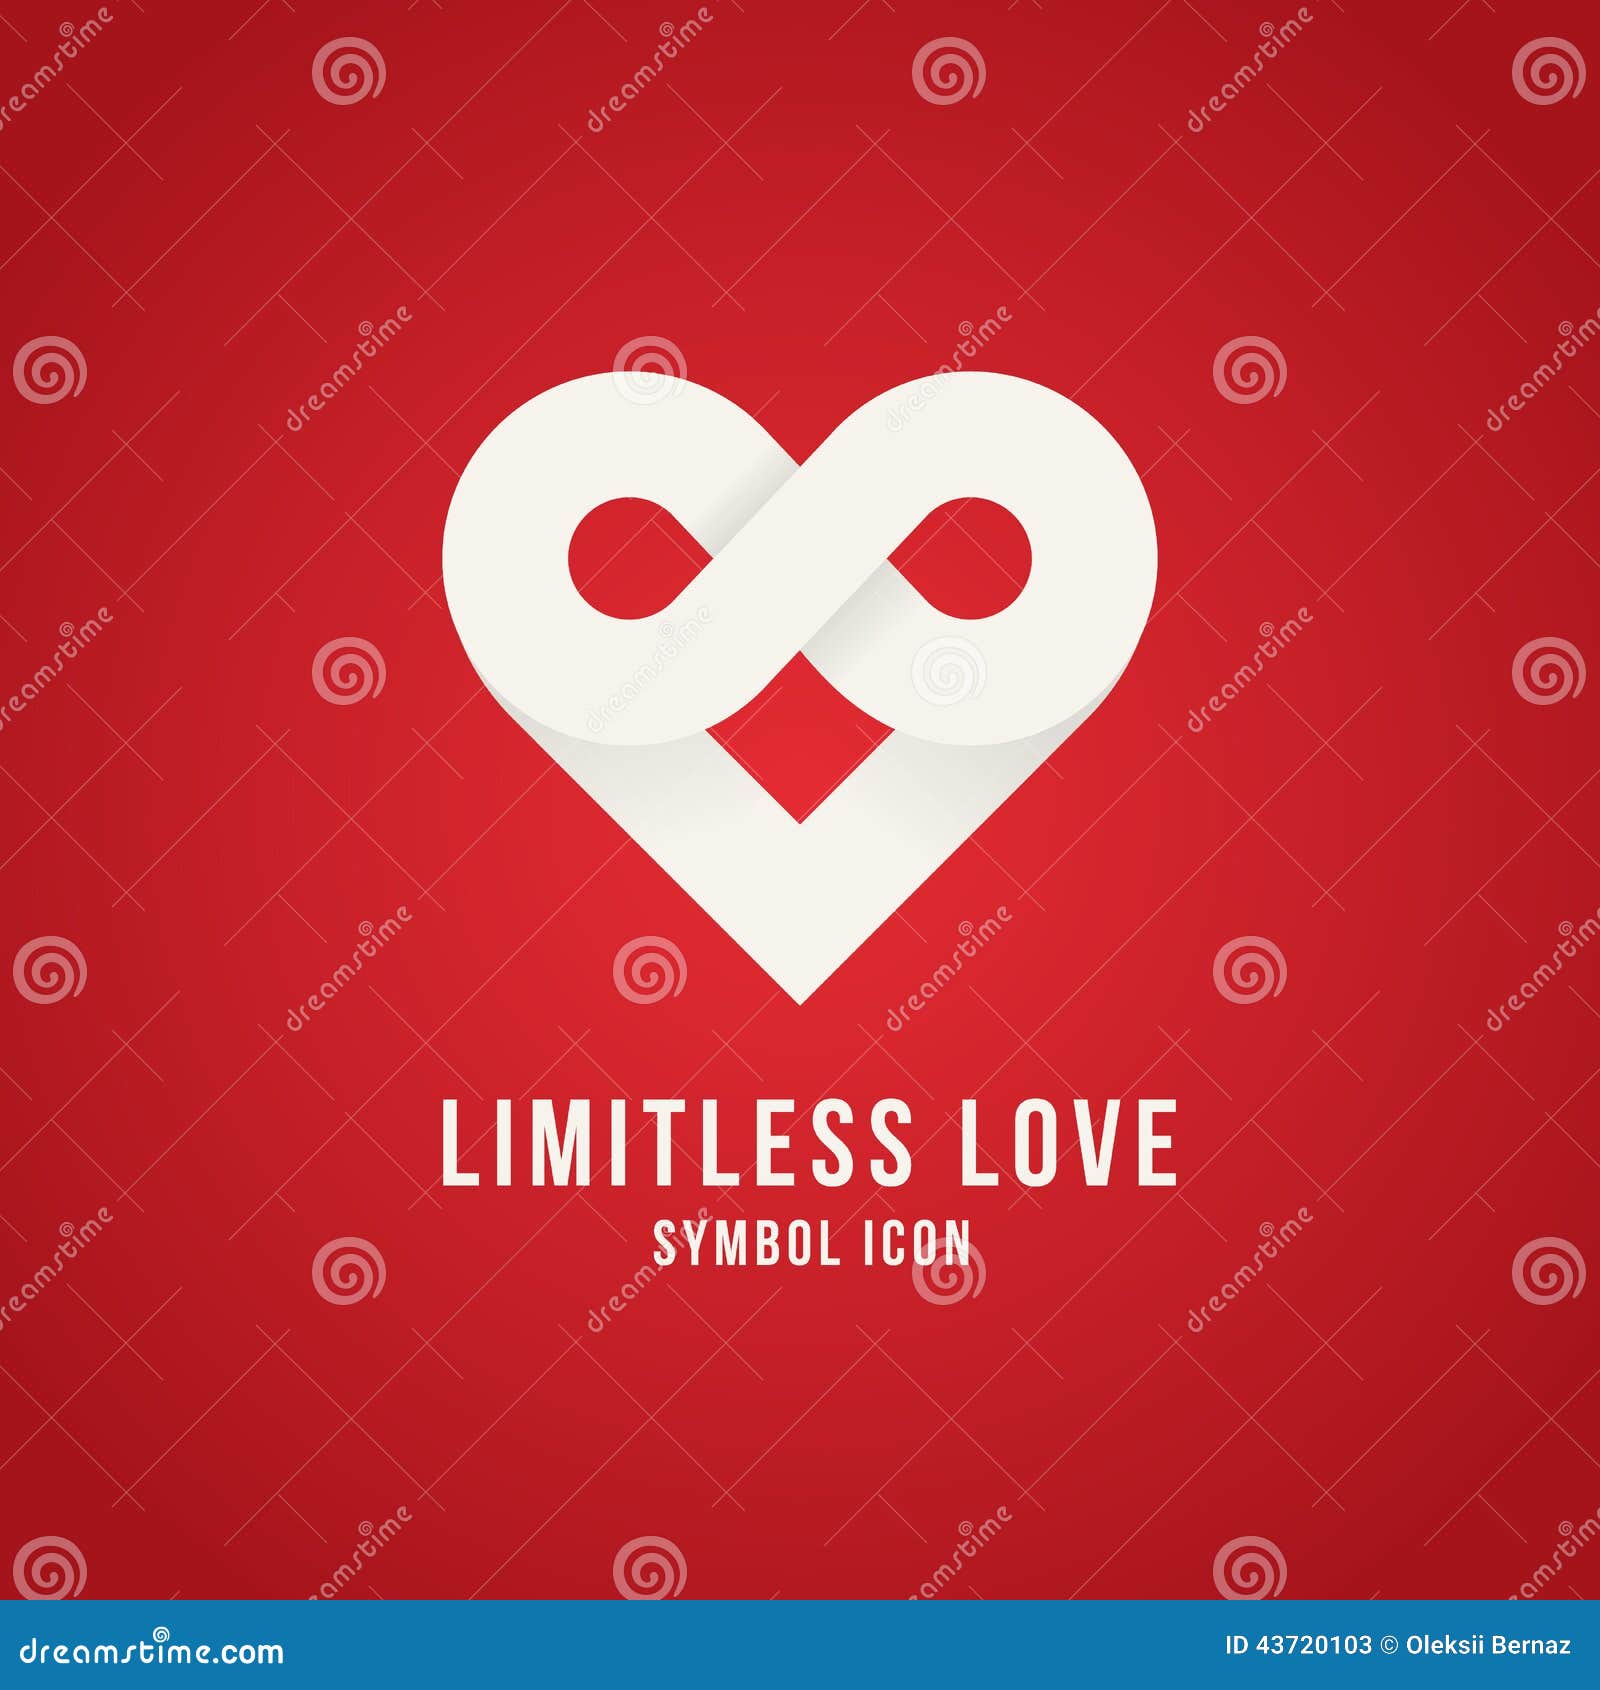 limitless love  concept  icon logo